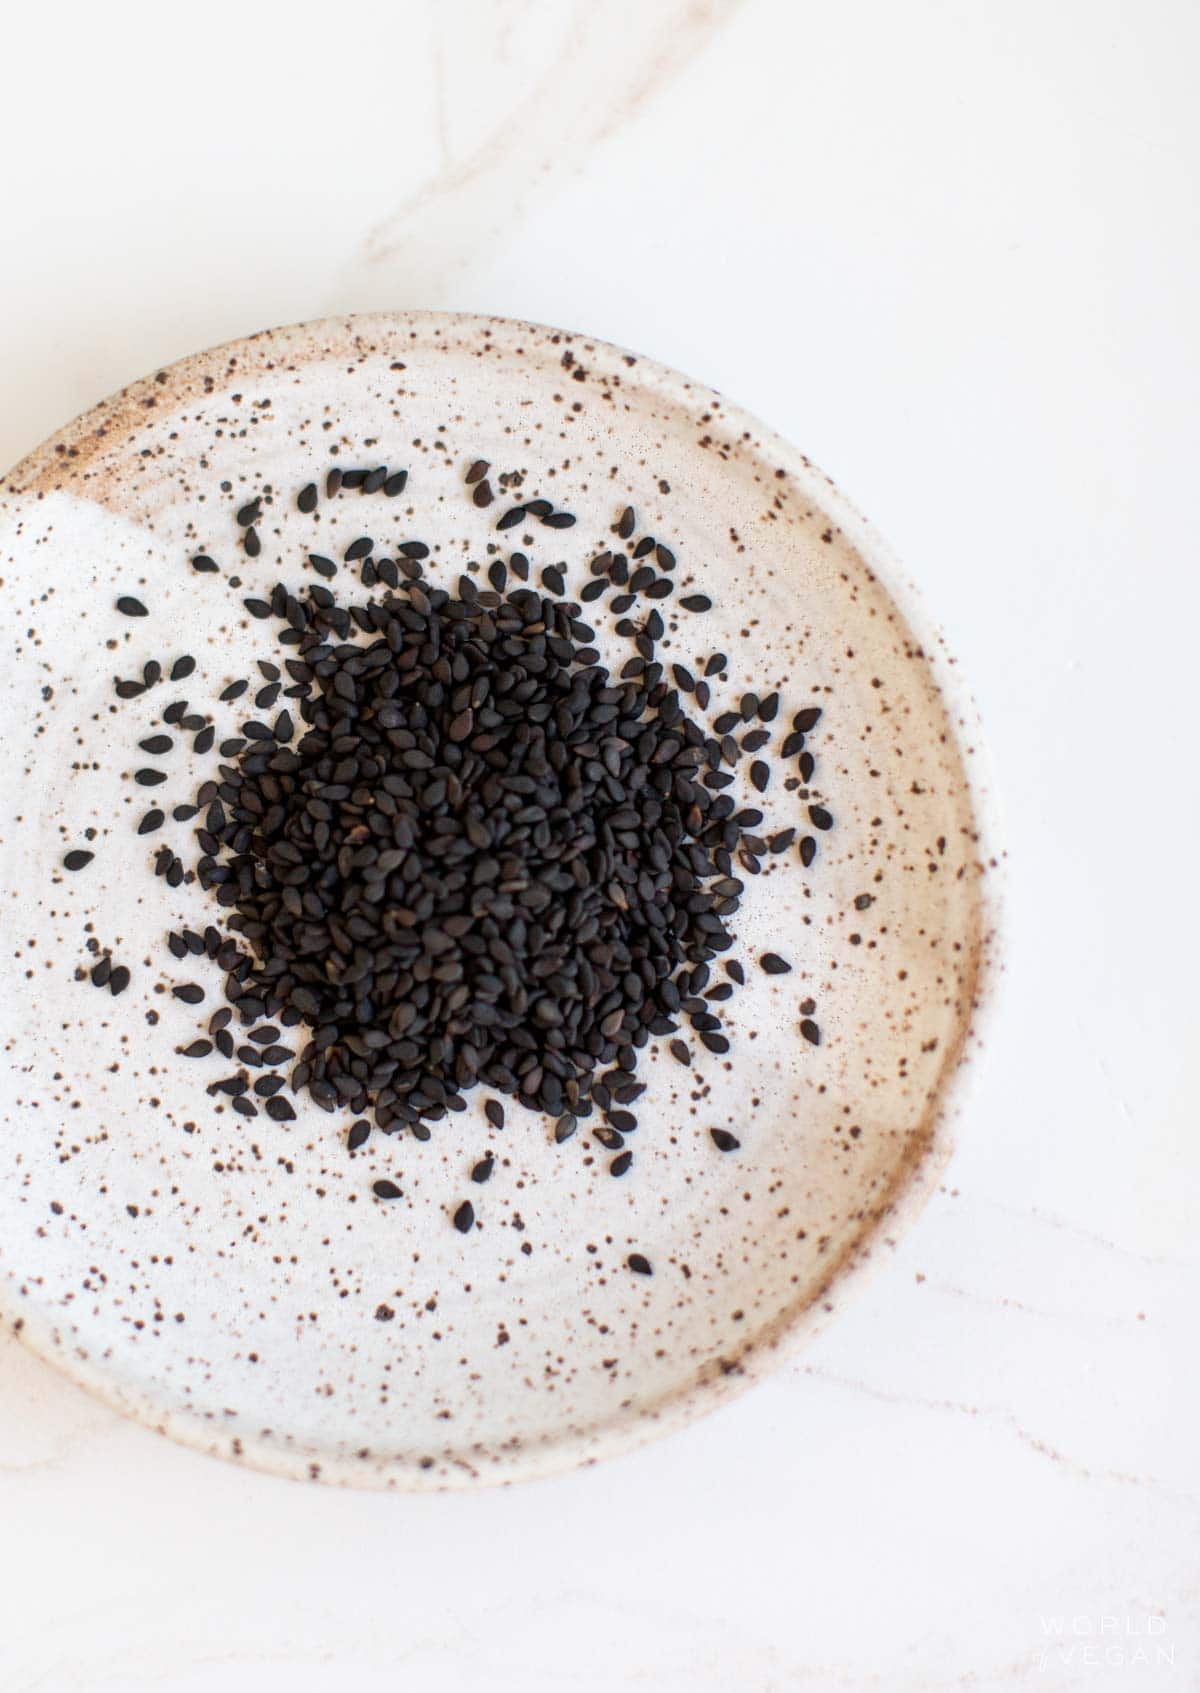 Black sesame seeds in a bowl.